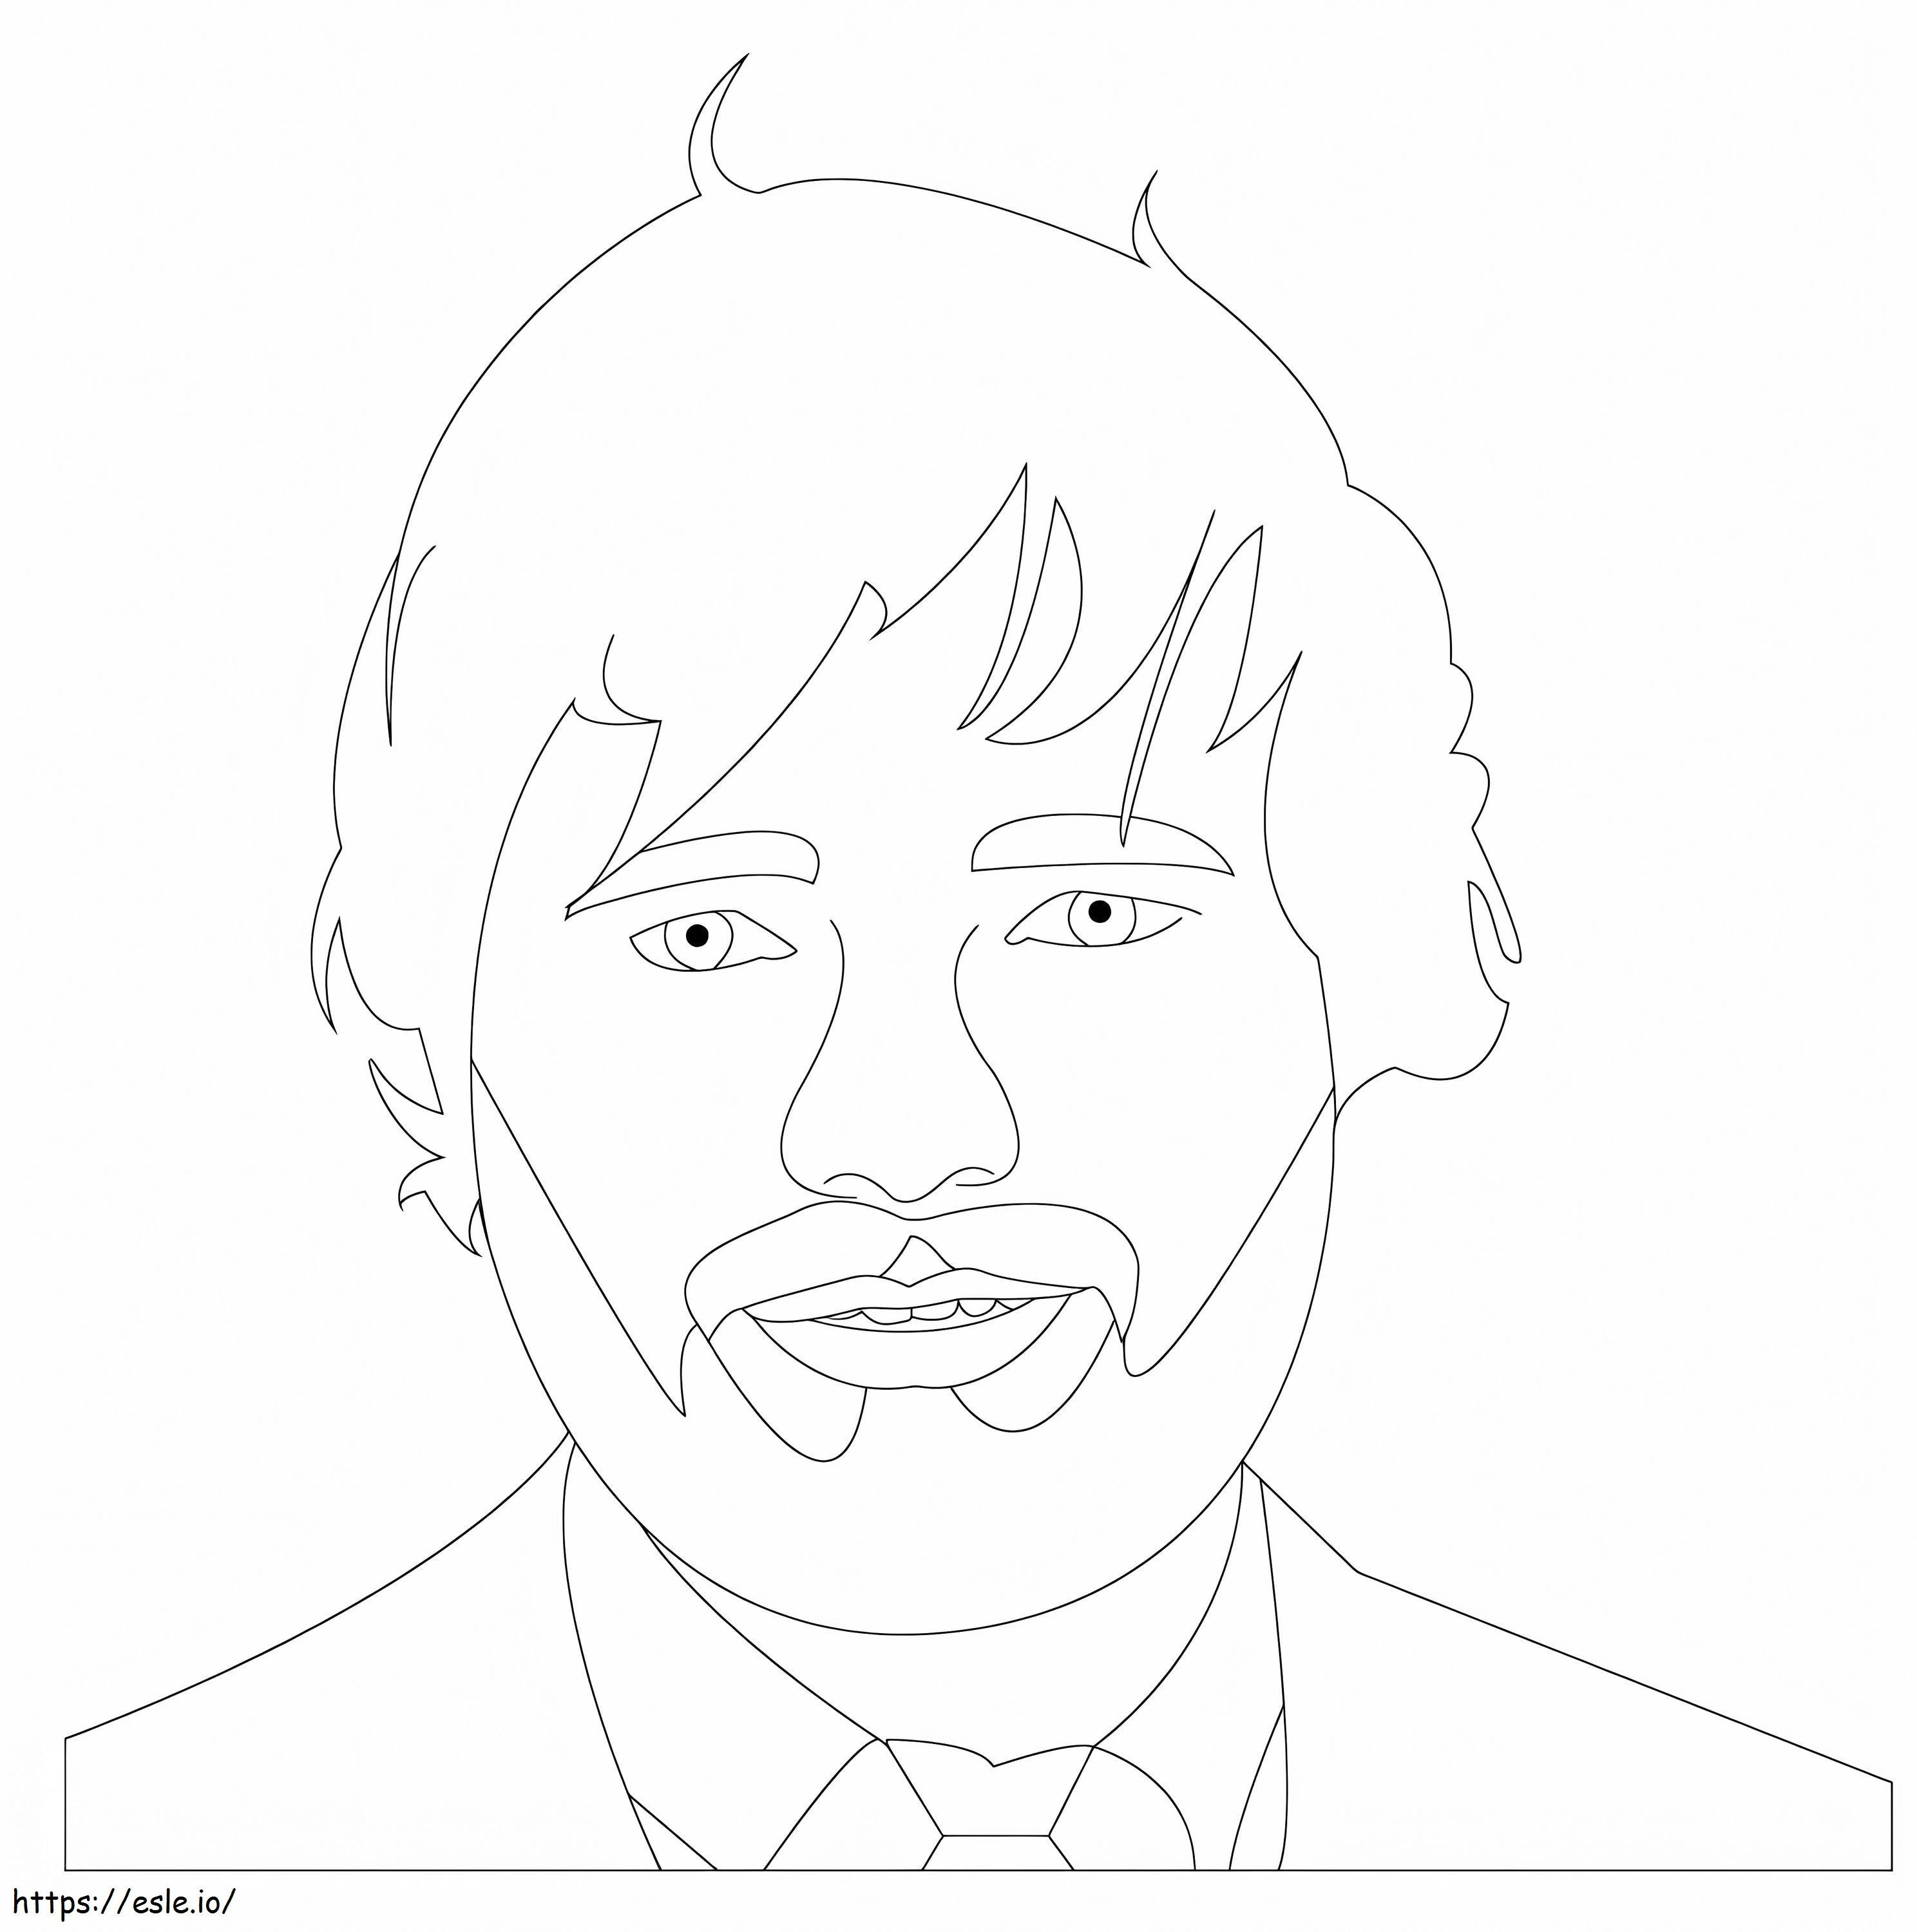 Ed Sheeran Free Printable coloring page